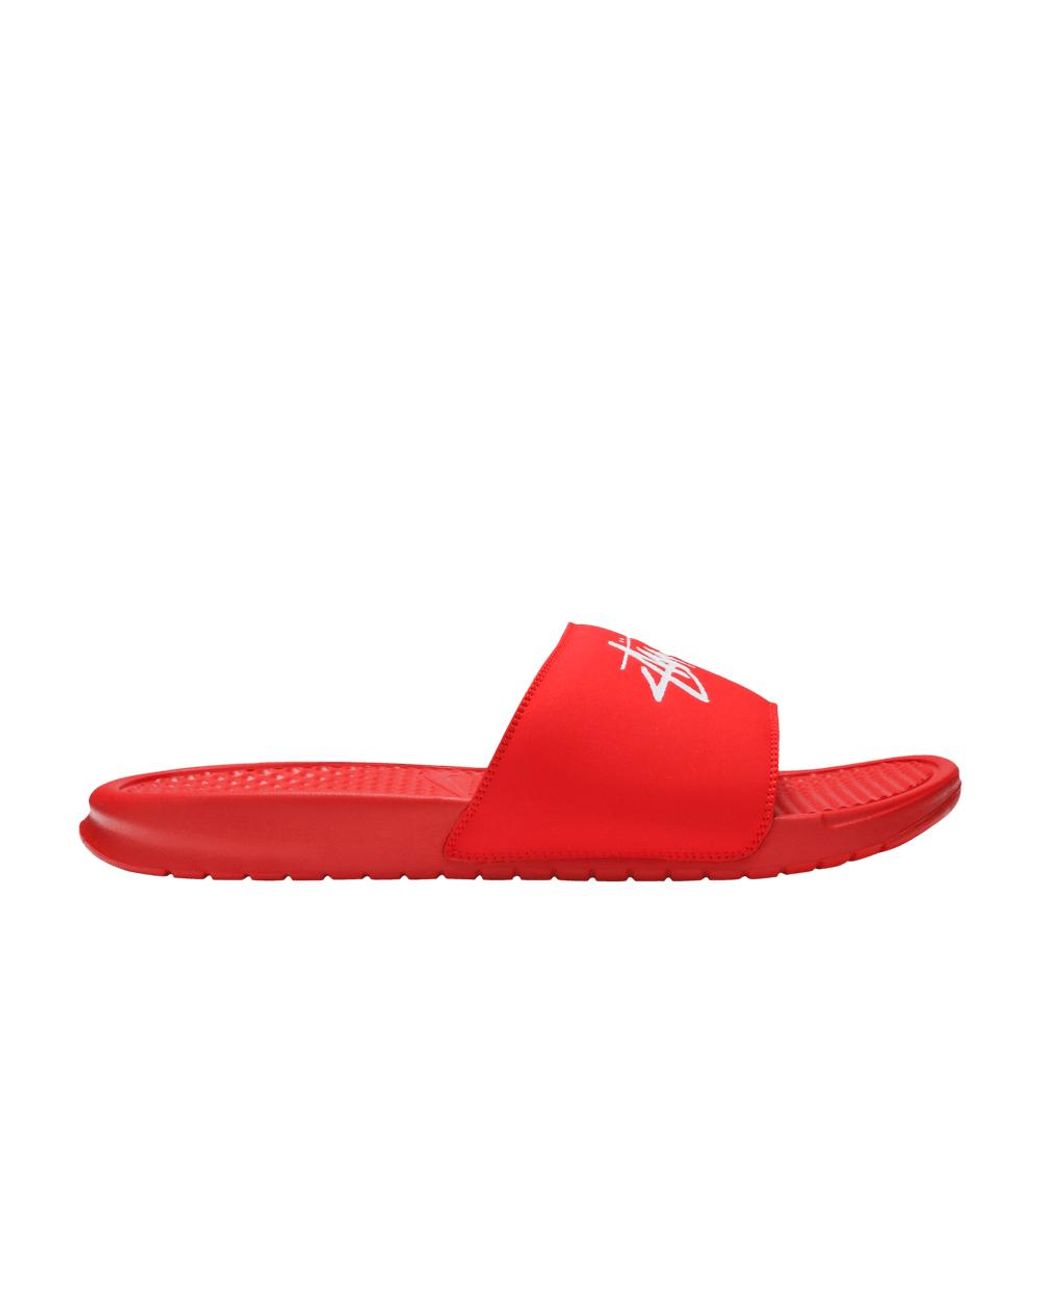 Nike Stussy X Benassi in Red for Men - Lyst